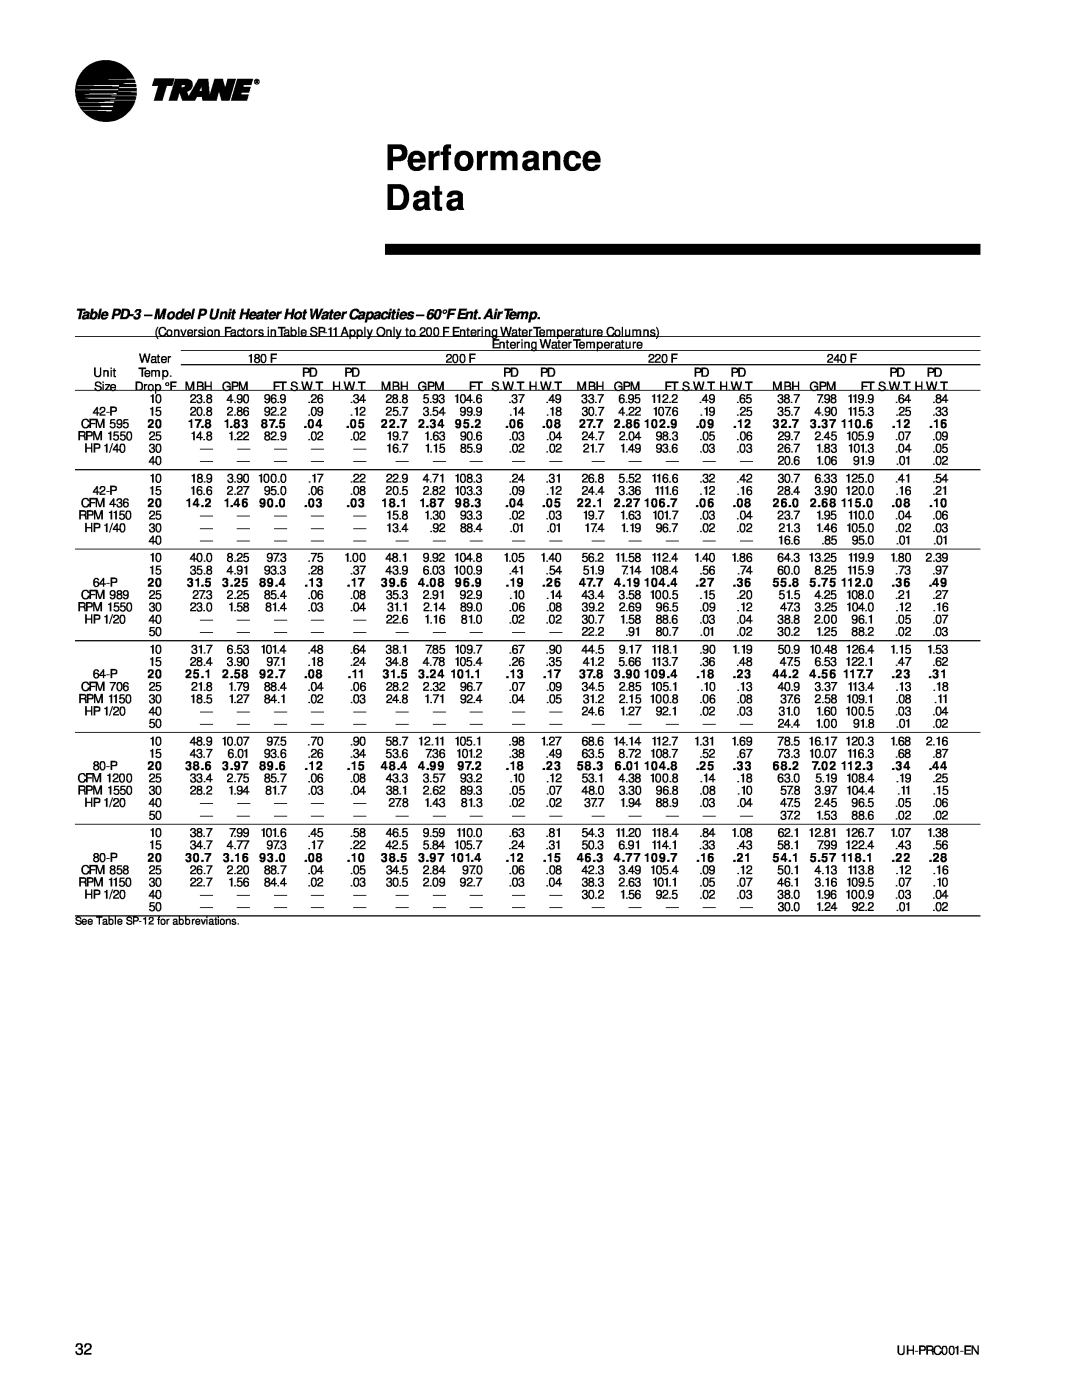 Trane UH-PRC001-EN manual Performance Data, Water 